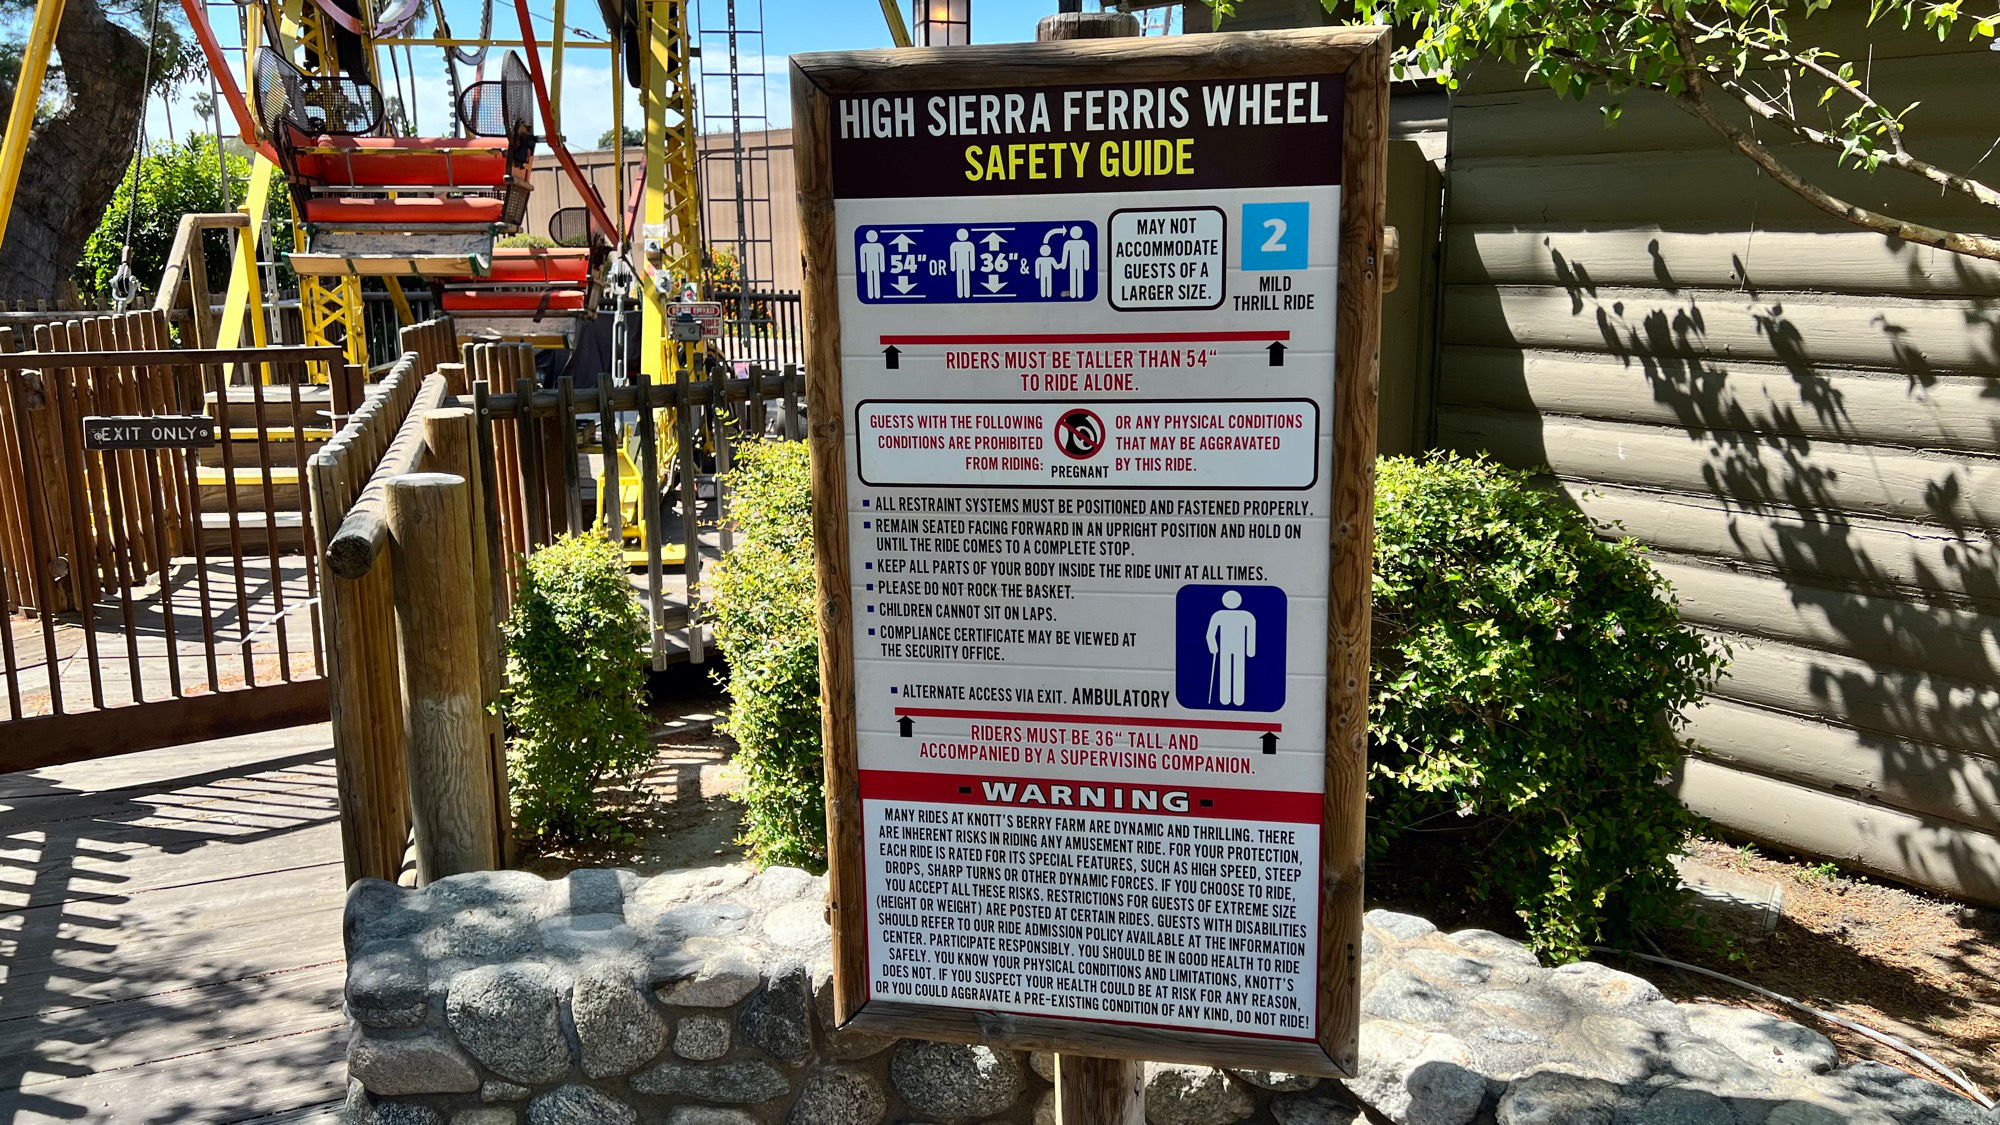 High Sierra Ferris Wheel Safety Guide